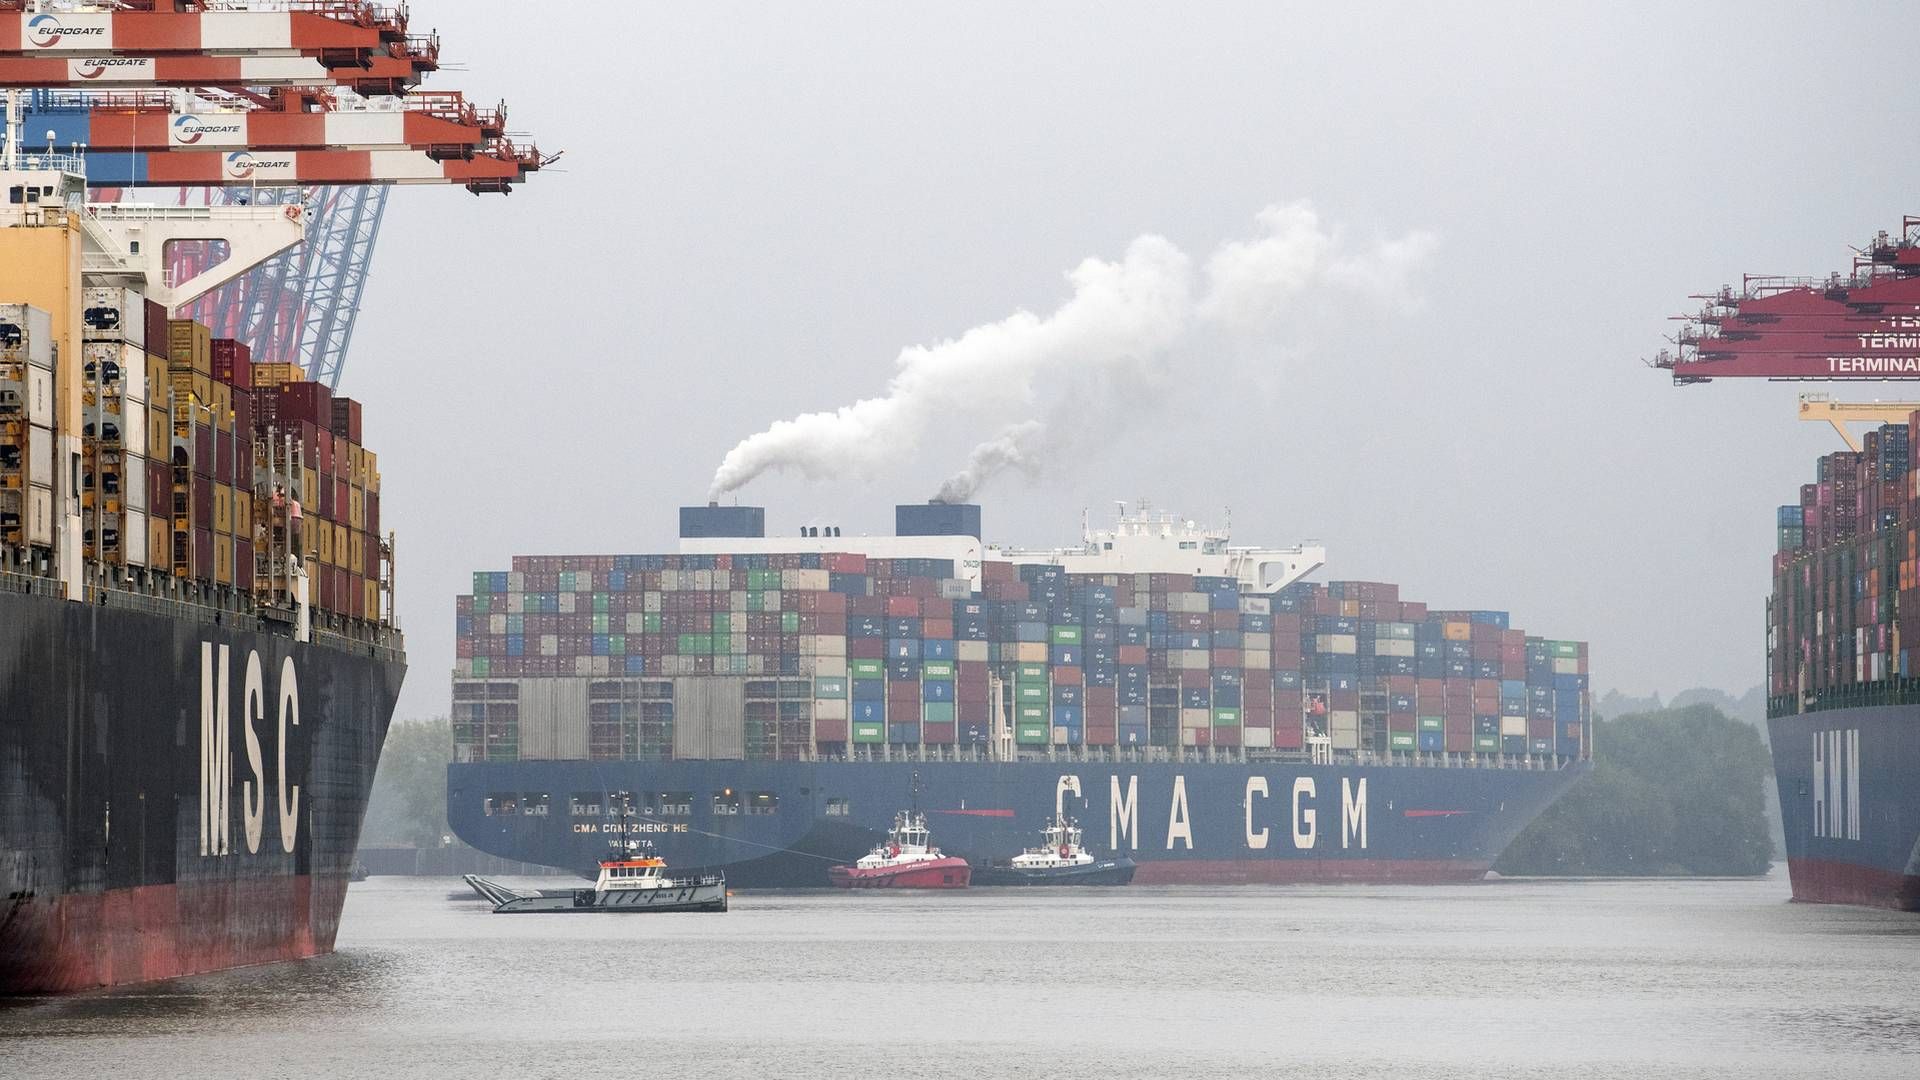 CMA CGM er blandt de rederier, der har bestilt et stort antal LNG-drevne containerskibe. | Foto: Daniel Bockwoldt/AP/Ritzau Scanpix